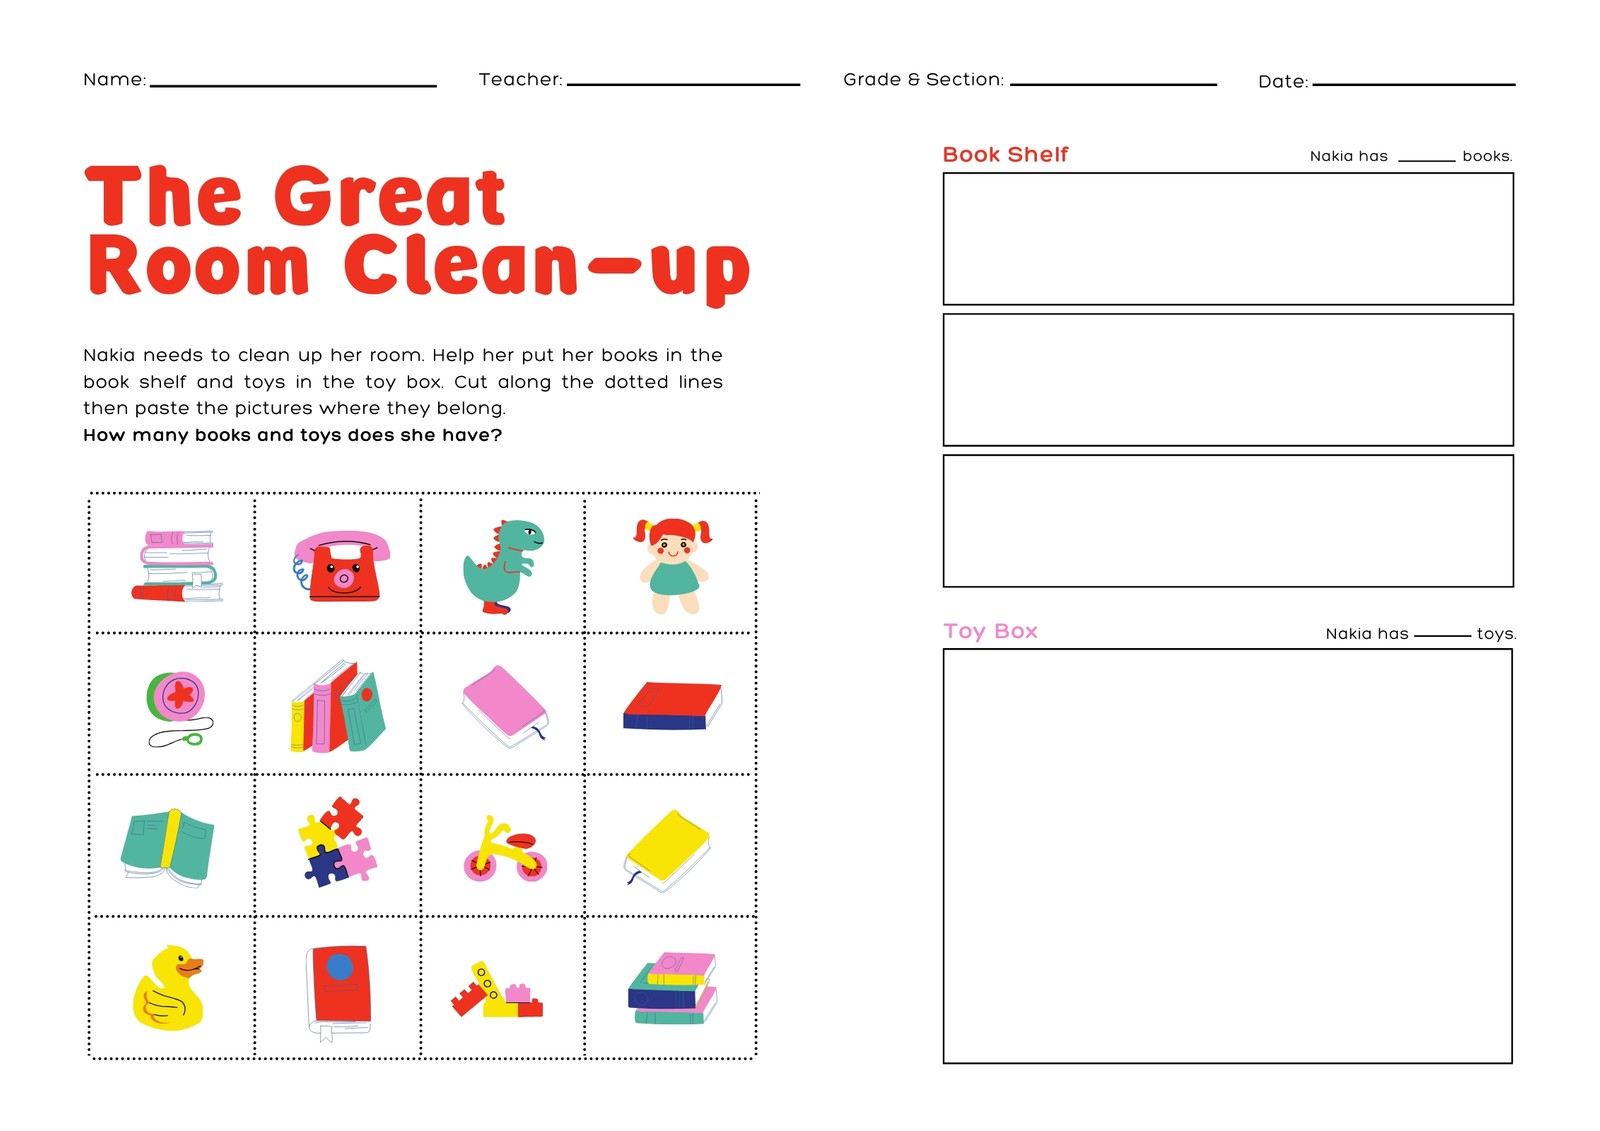 Free printable, customizable education flyer templates